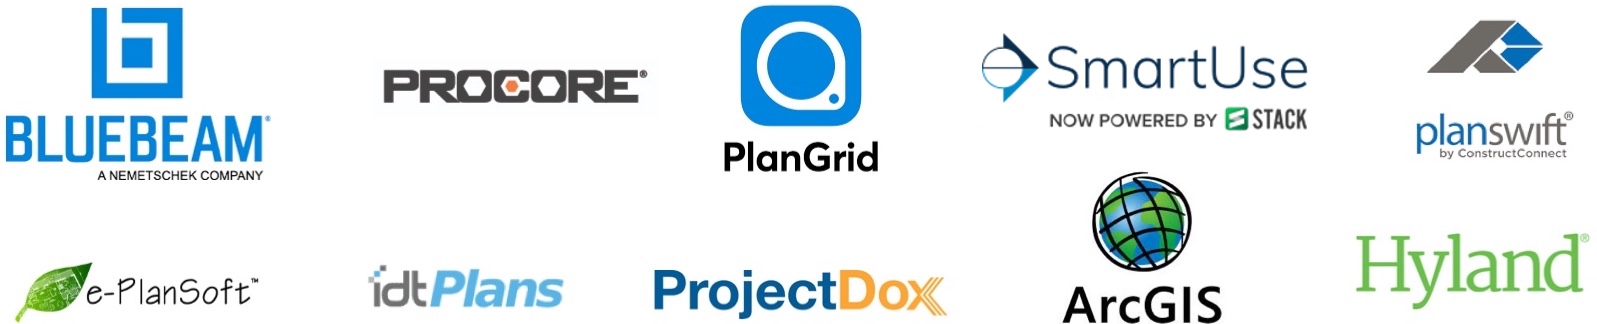 bluebeam procore plangrid planswift eplansoft idtplans project dox